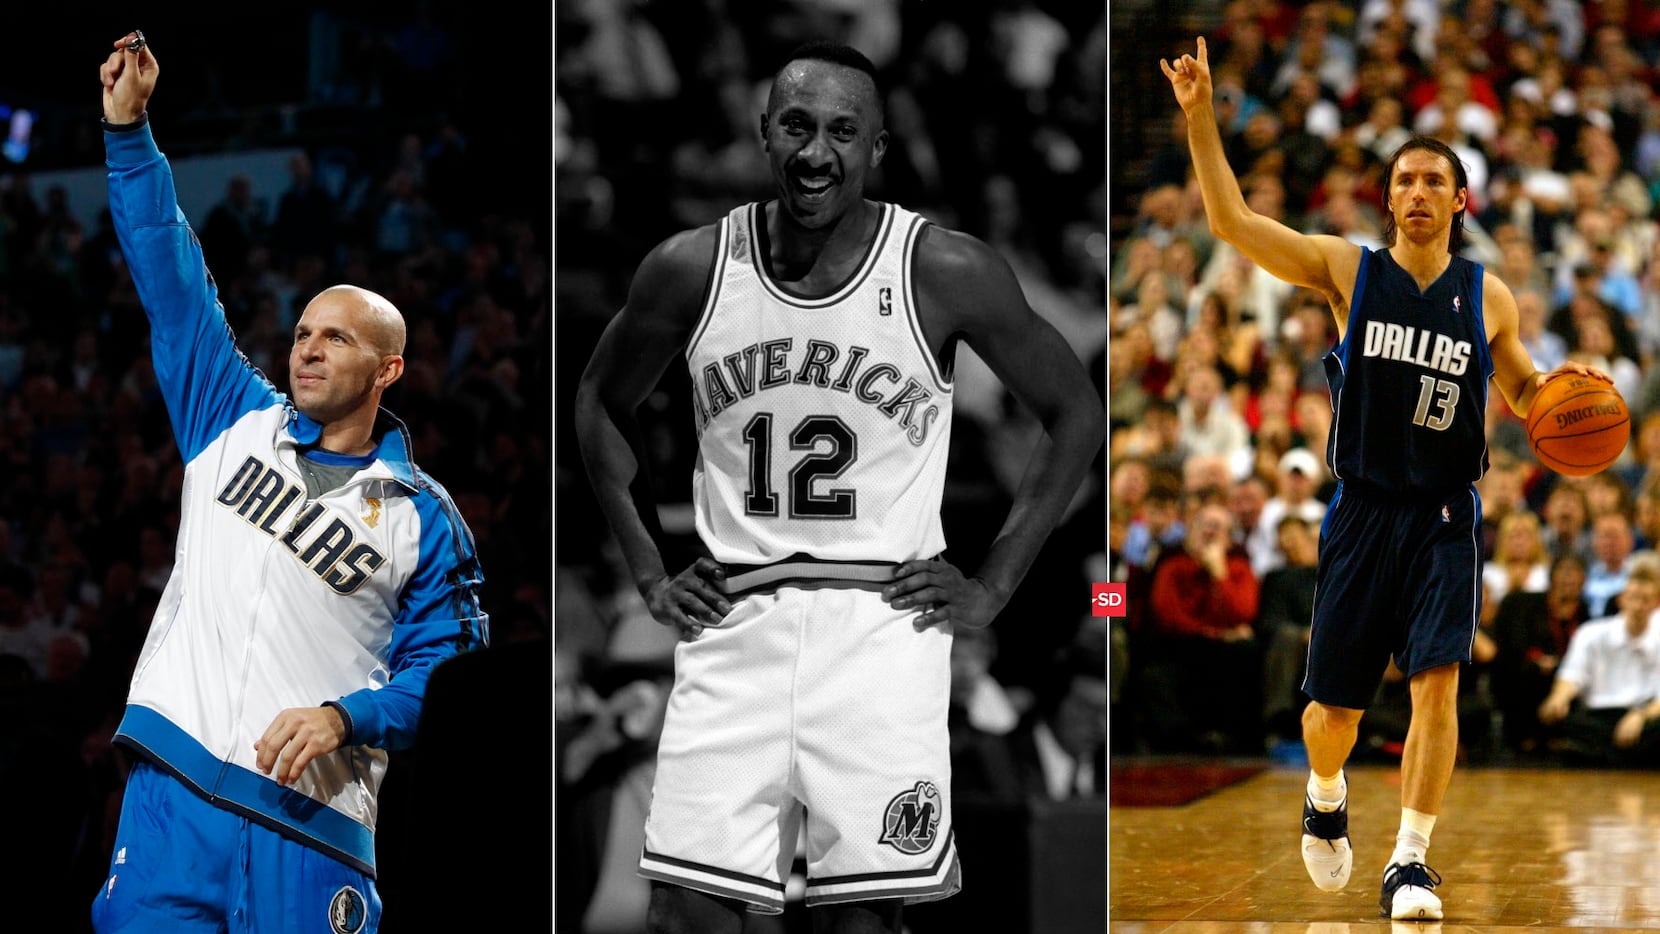 90s Jason Kidd Dallas Mavericks NBA Basketball Jersey Vintage 